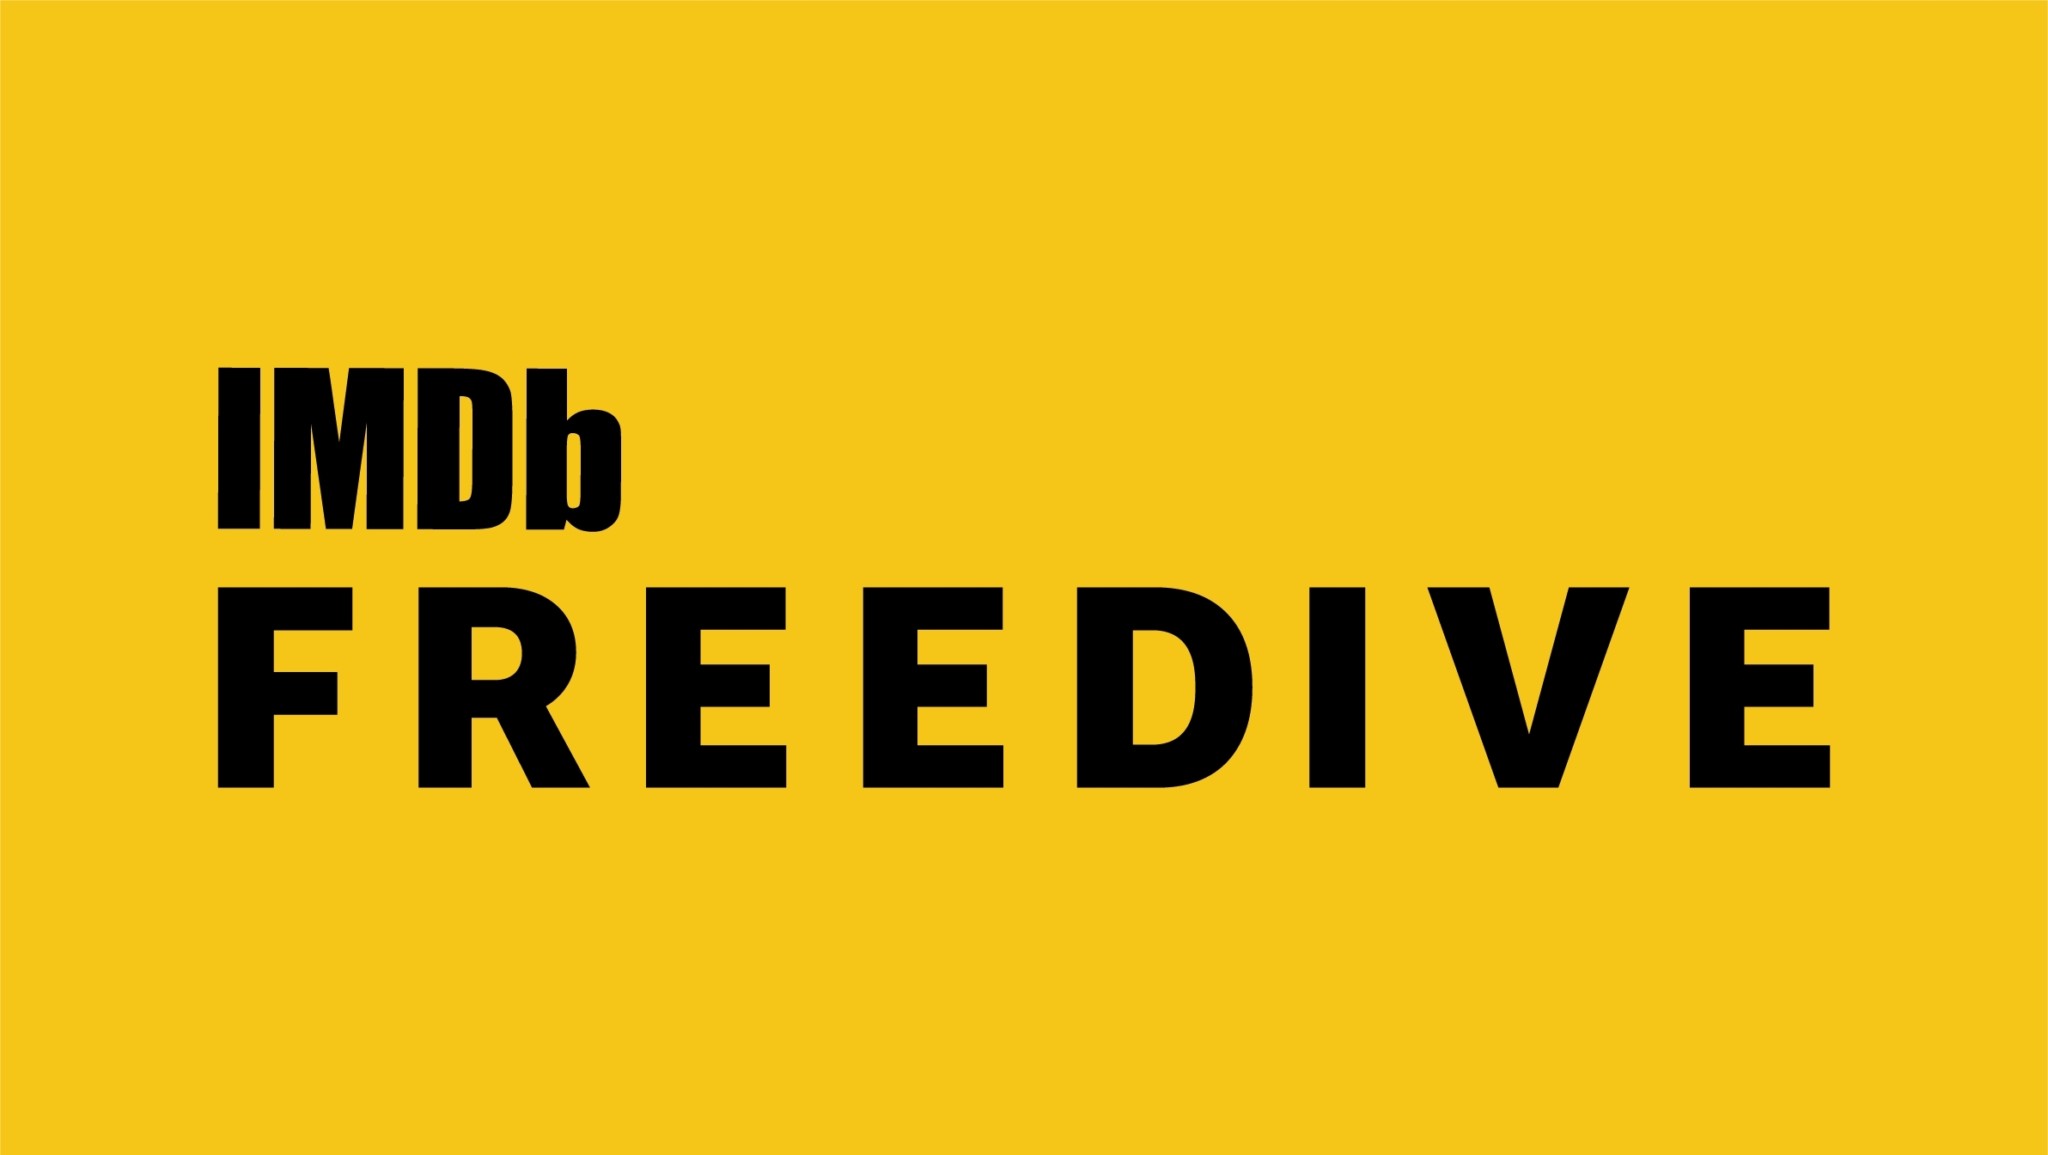 imdb freedive logo